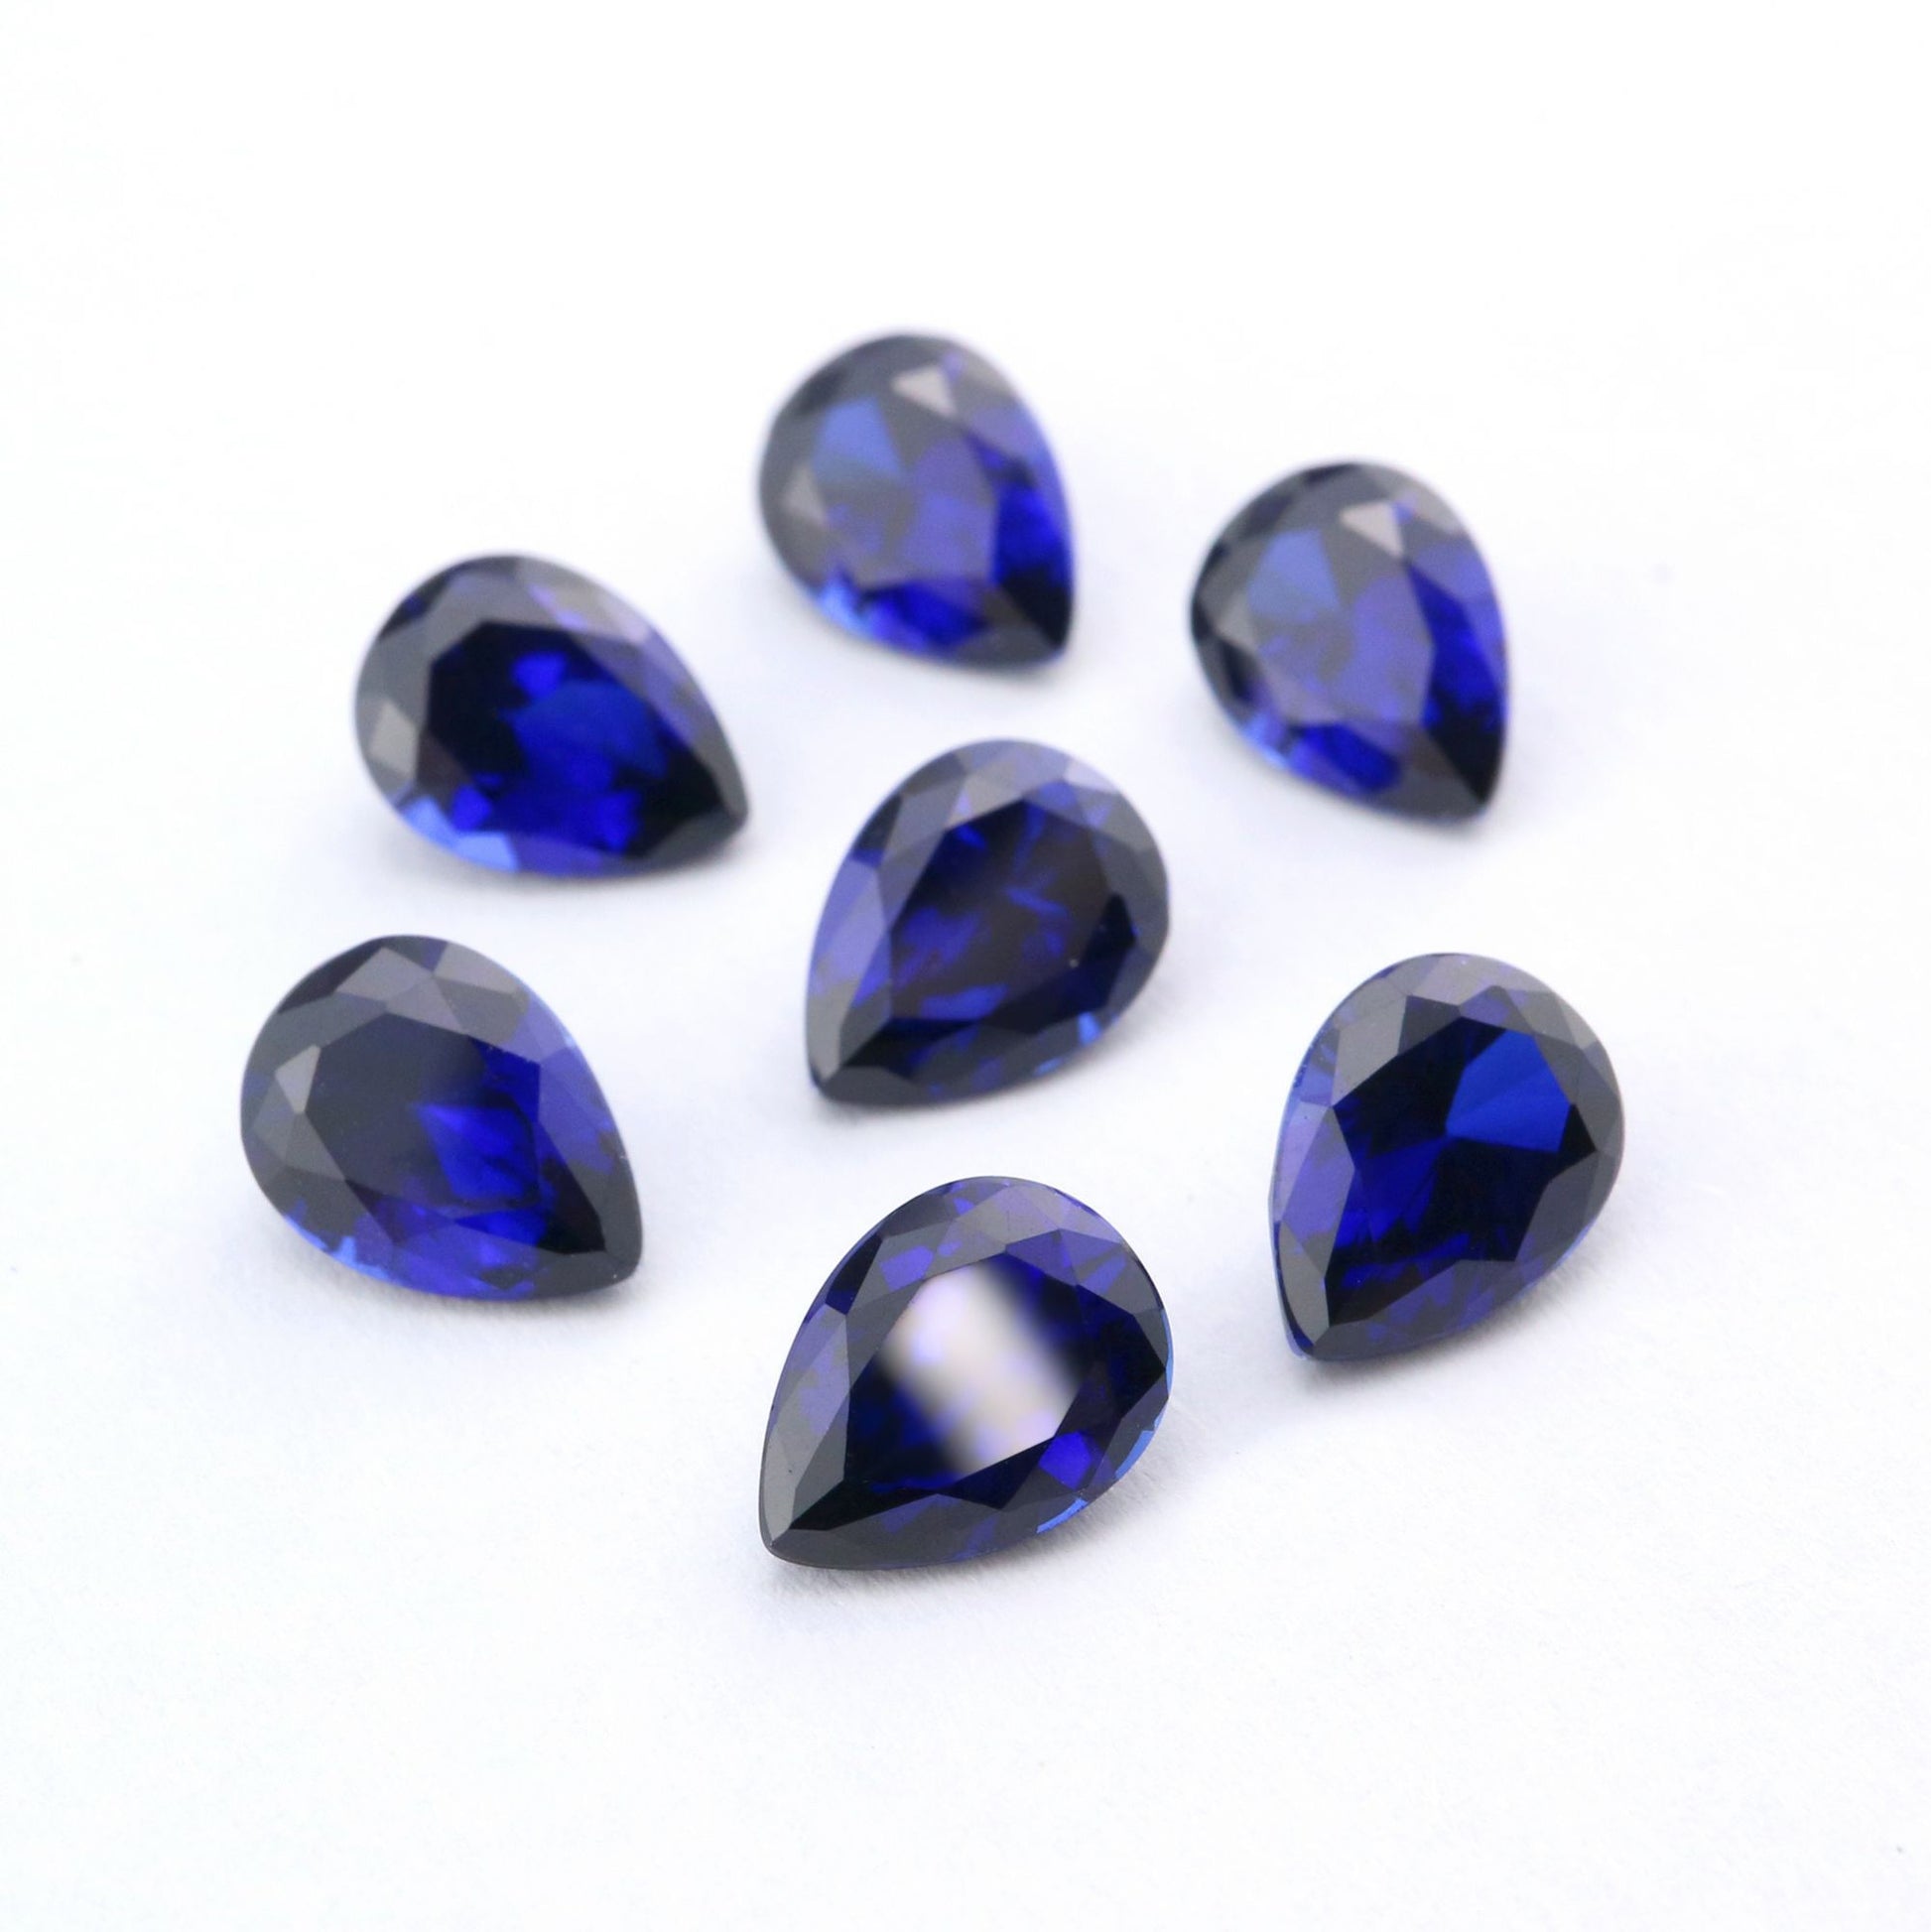 Seven tear drop cut dark blue lab created sapphire.